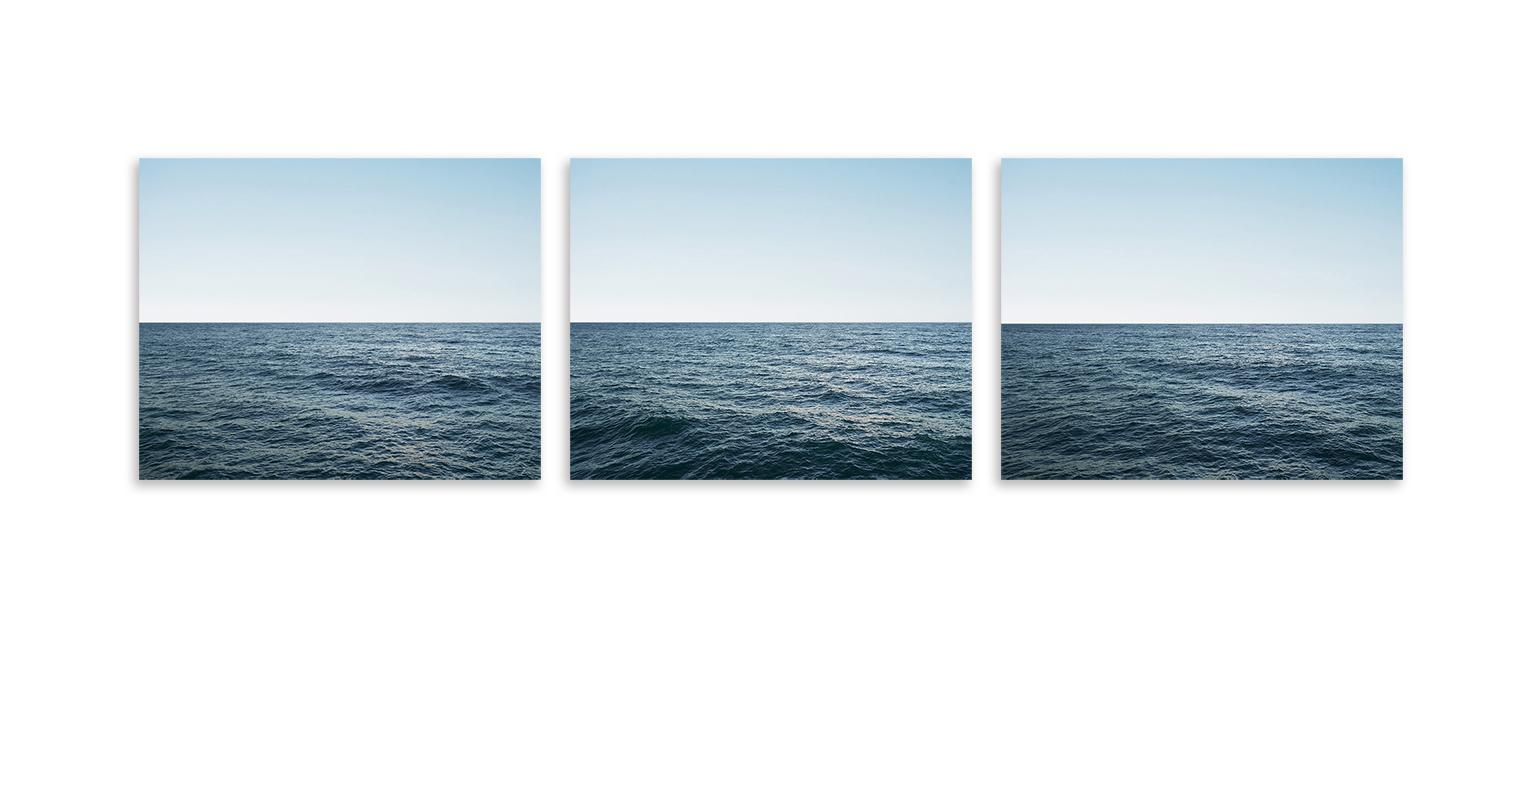 Seascape XI Triptych - 3 large format photograph of blue ocean surface & horizon